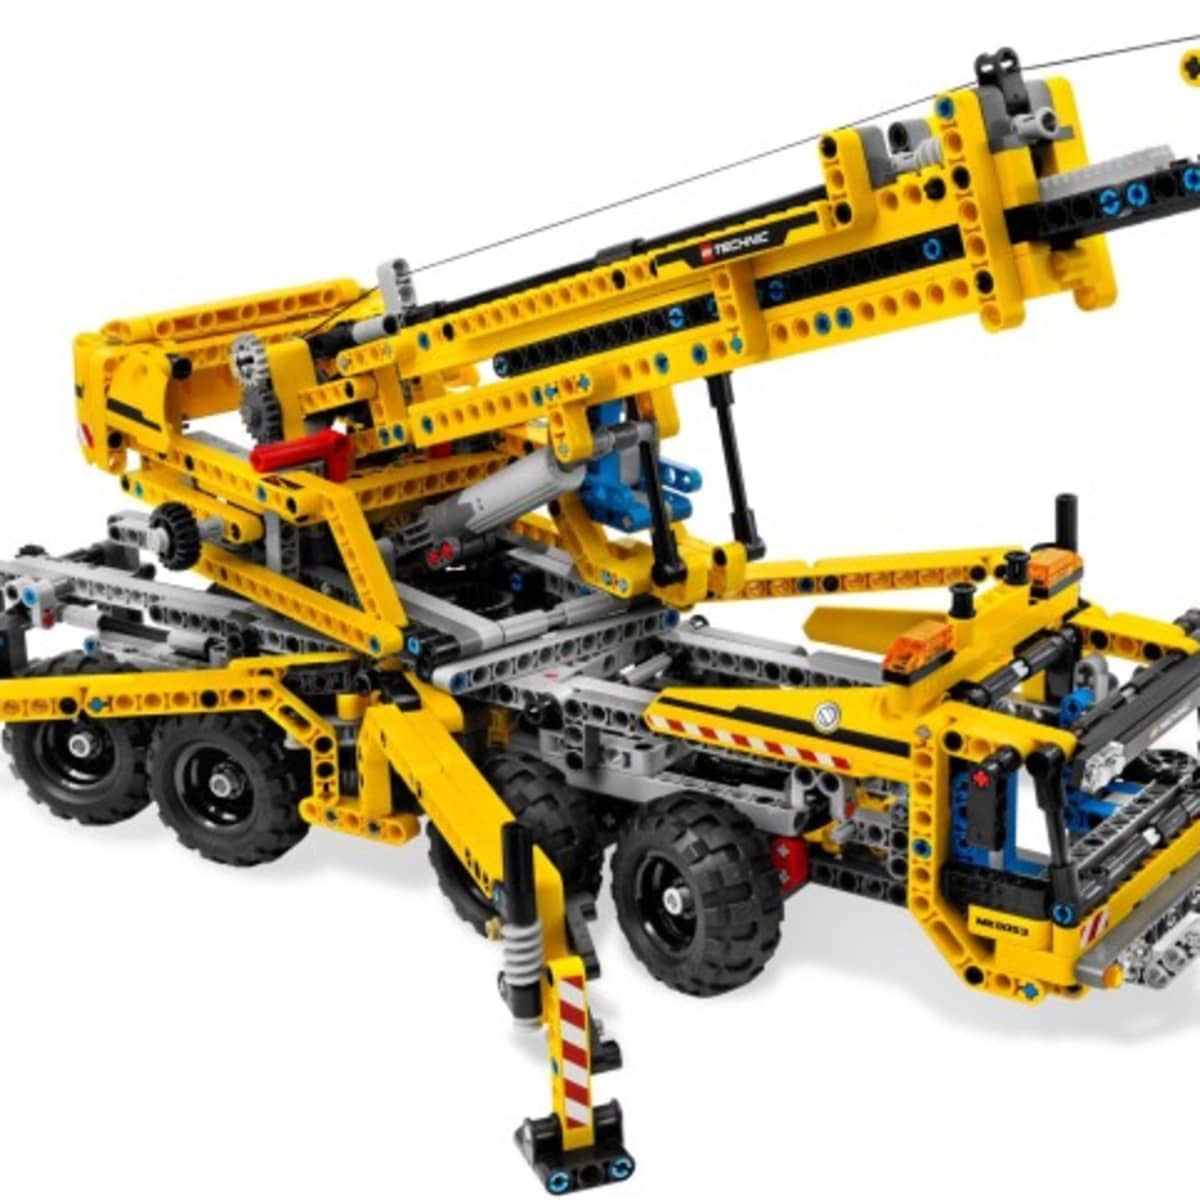 Lego Technic: All of the Large Technic of the Decade! - HobbyLark